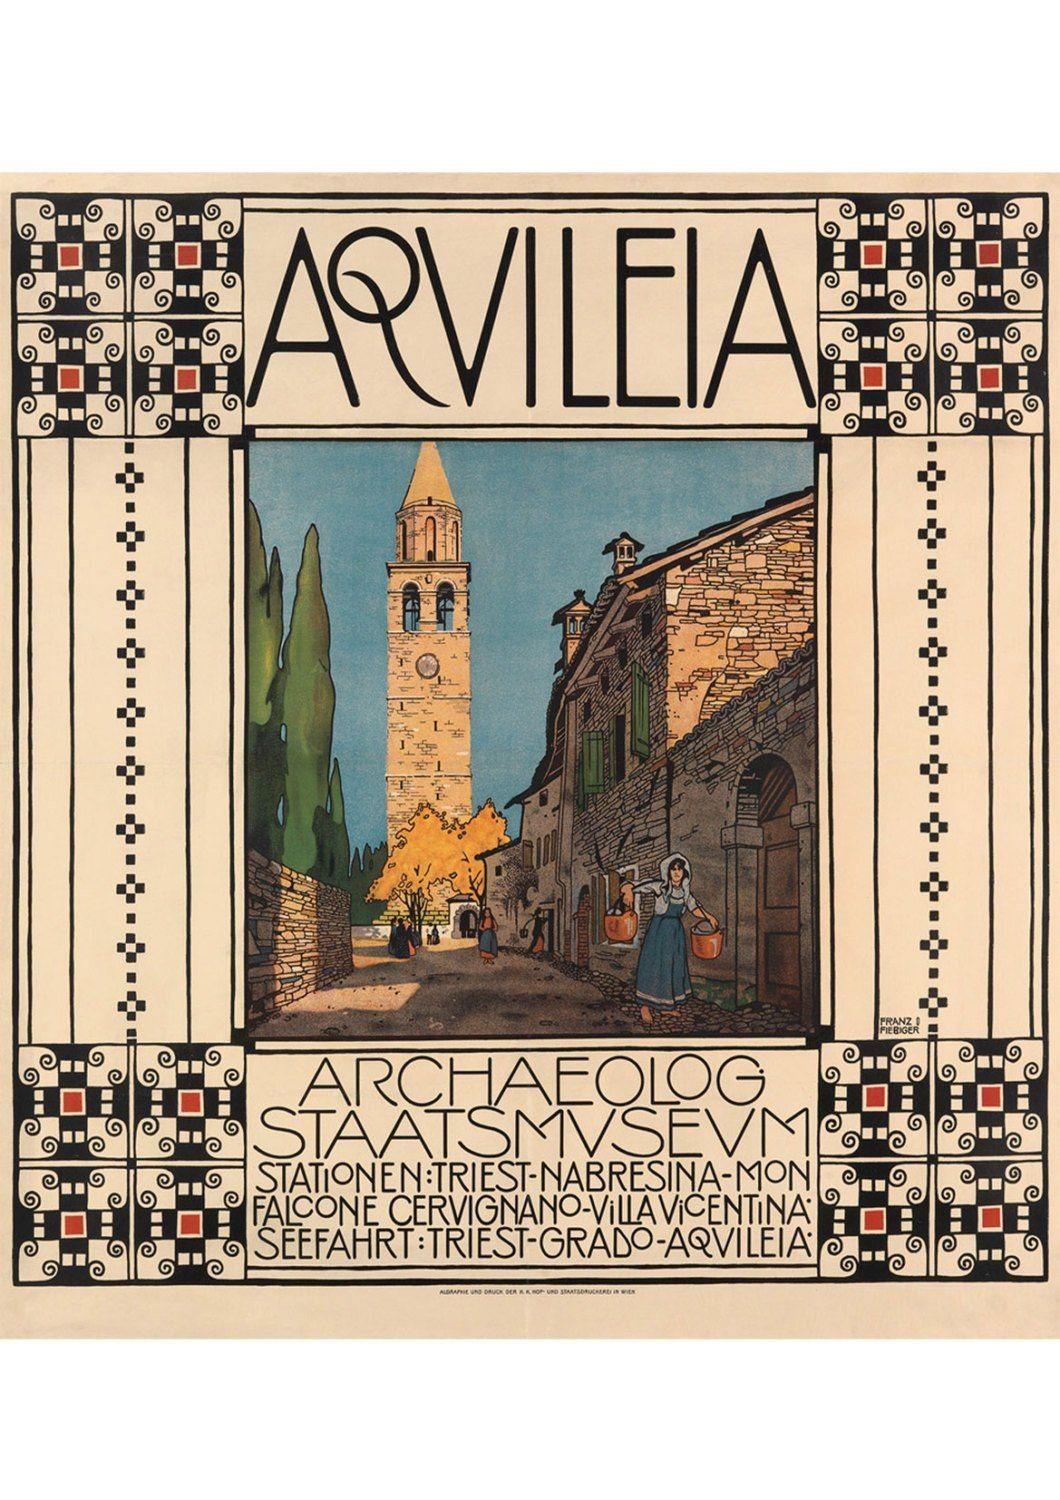 AQUILEIA MUSEUM POSTER: Vintage Italy Travel Advert - Pimlico Prints